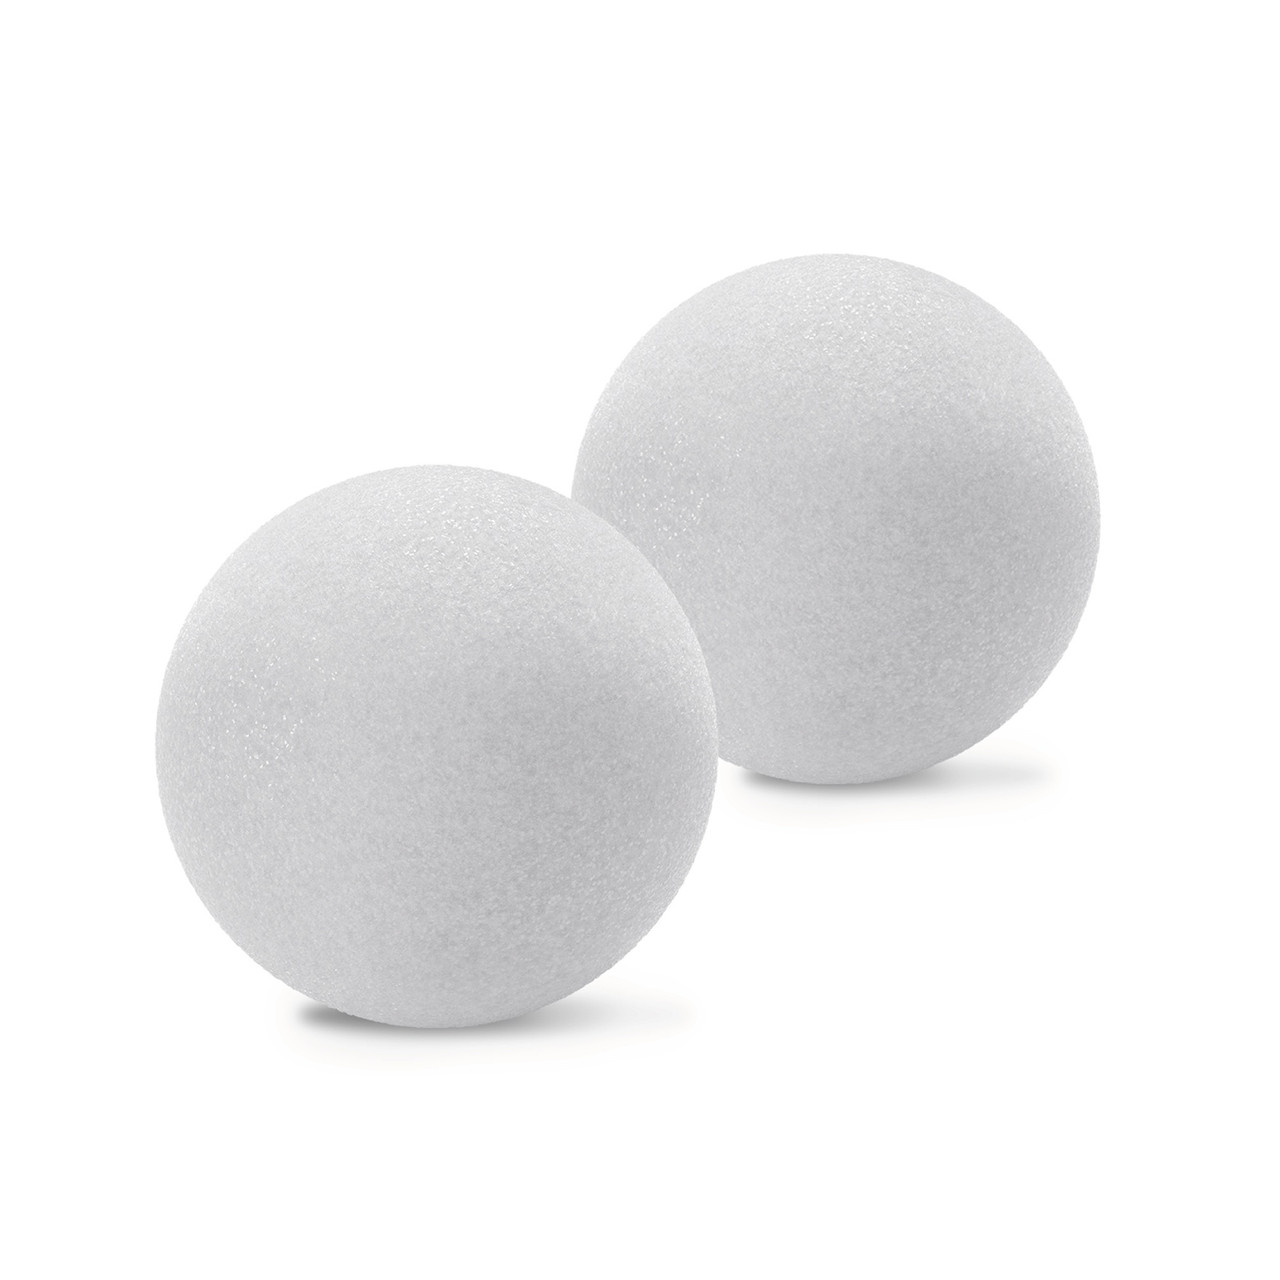 Floracraft Styrofoam Balls, 3-Inch, White, Pack of 6 (BA3H)